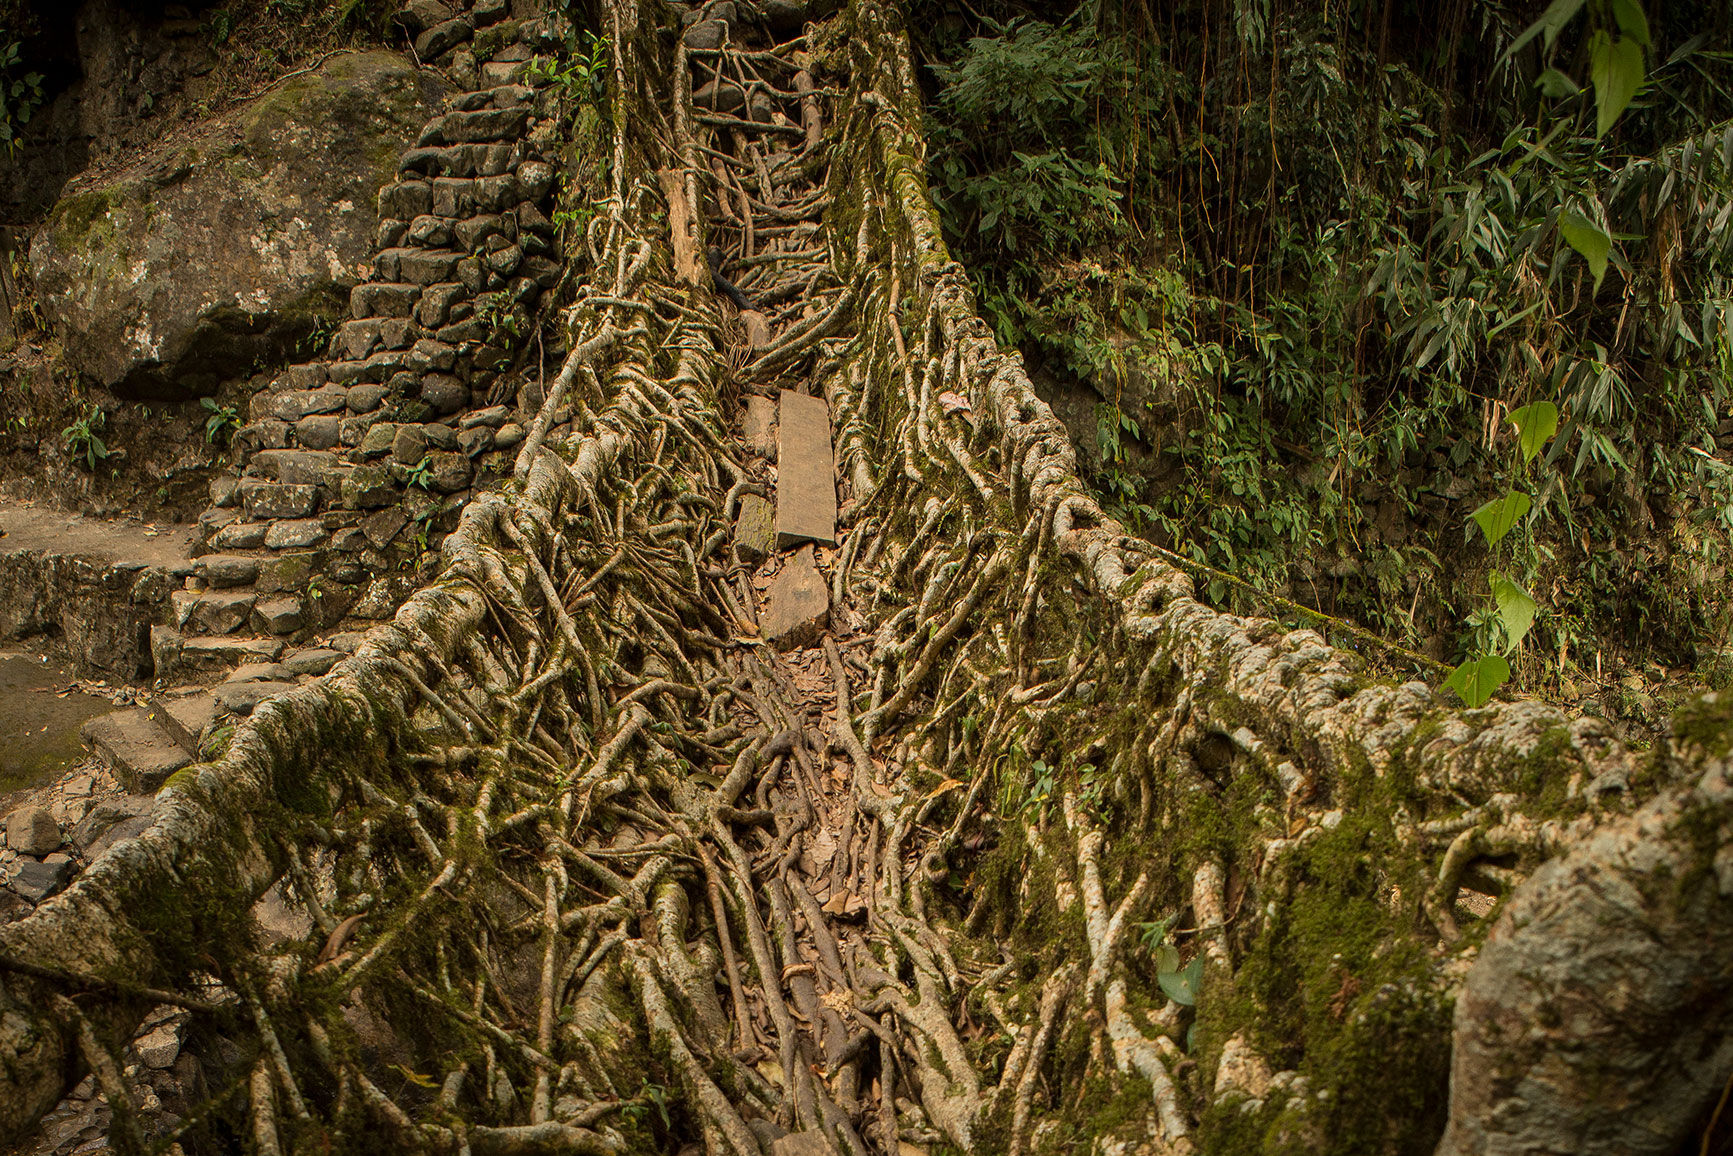 Living bridges of roots/